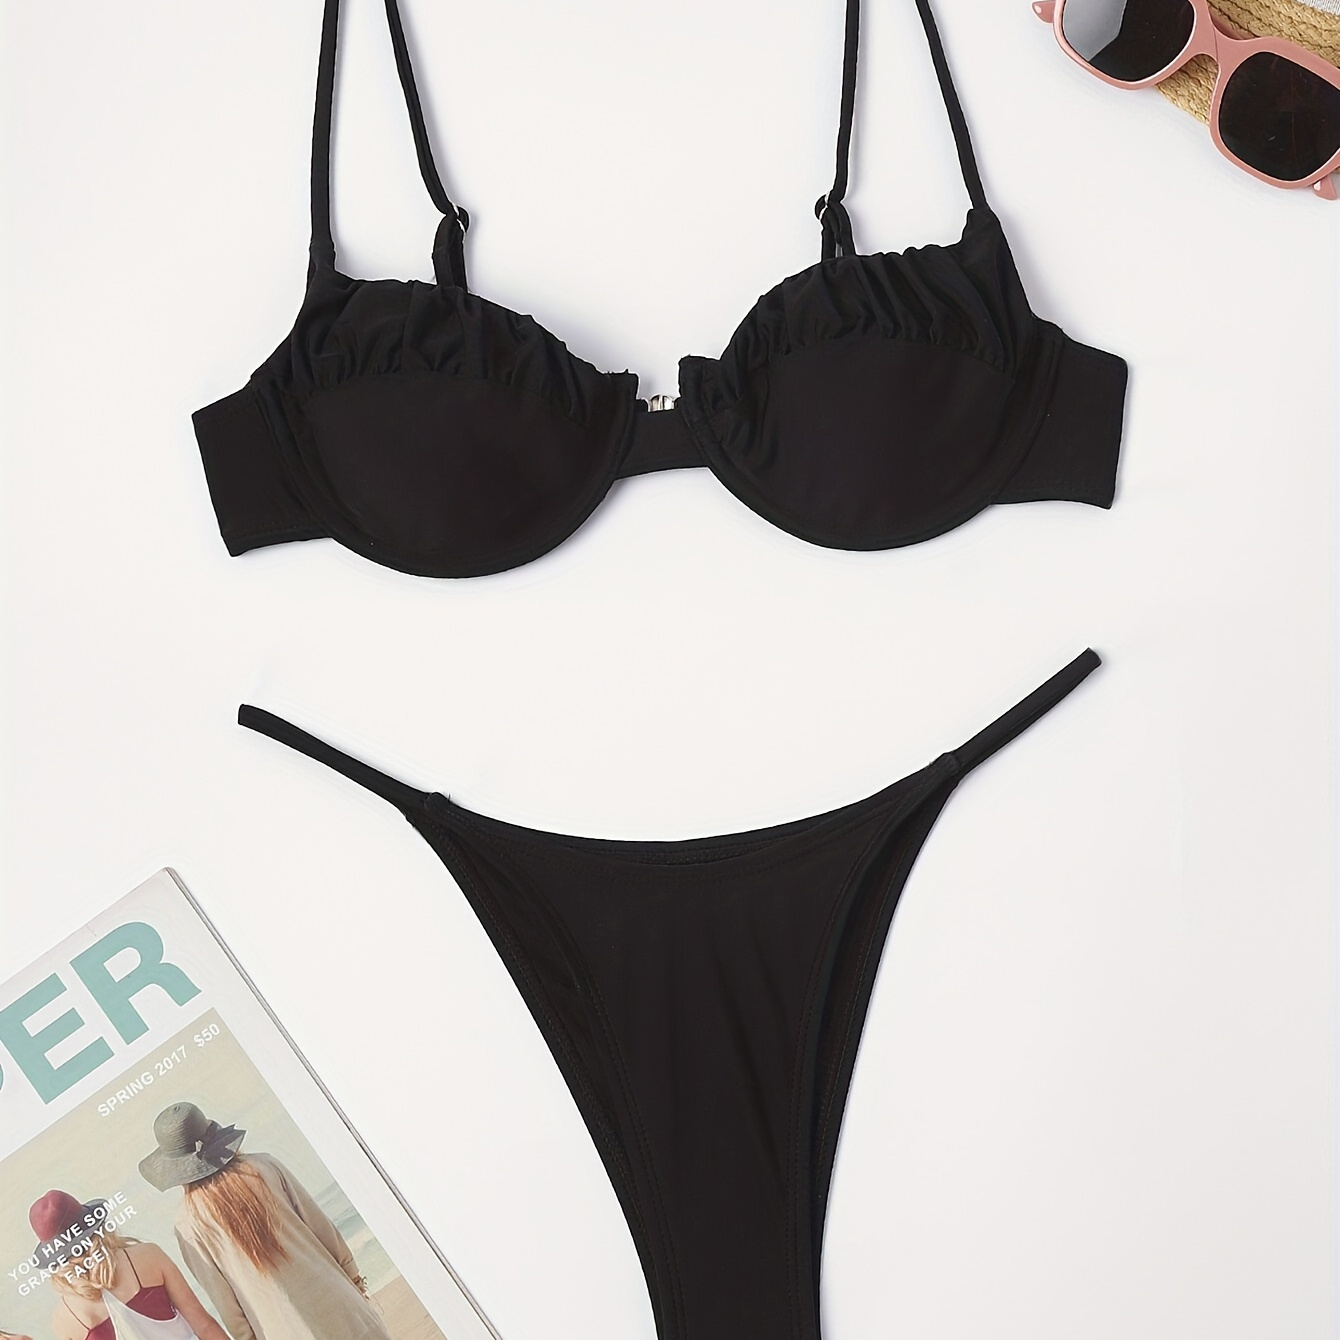 

Ruched Solid Black Push Up 2-piece Set Bikini, V String Spaghetti Strap Stretchy Plain Swimsuit For Beach Pool Bathing, Women's Swimwear & Clothing